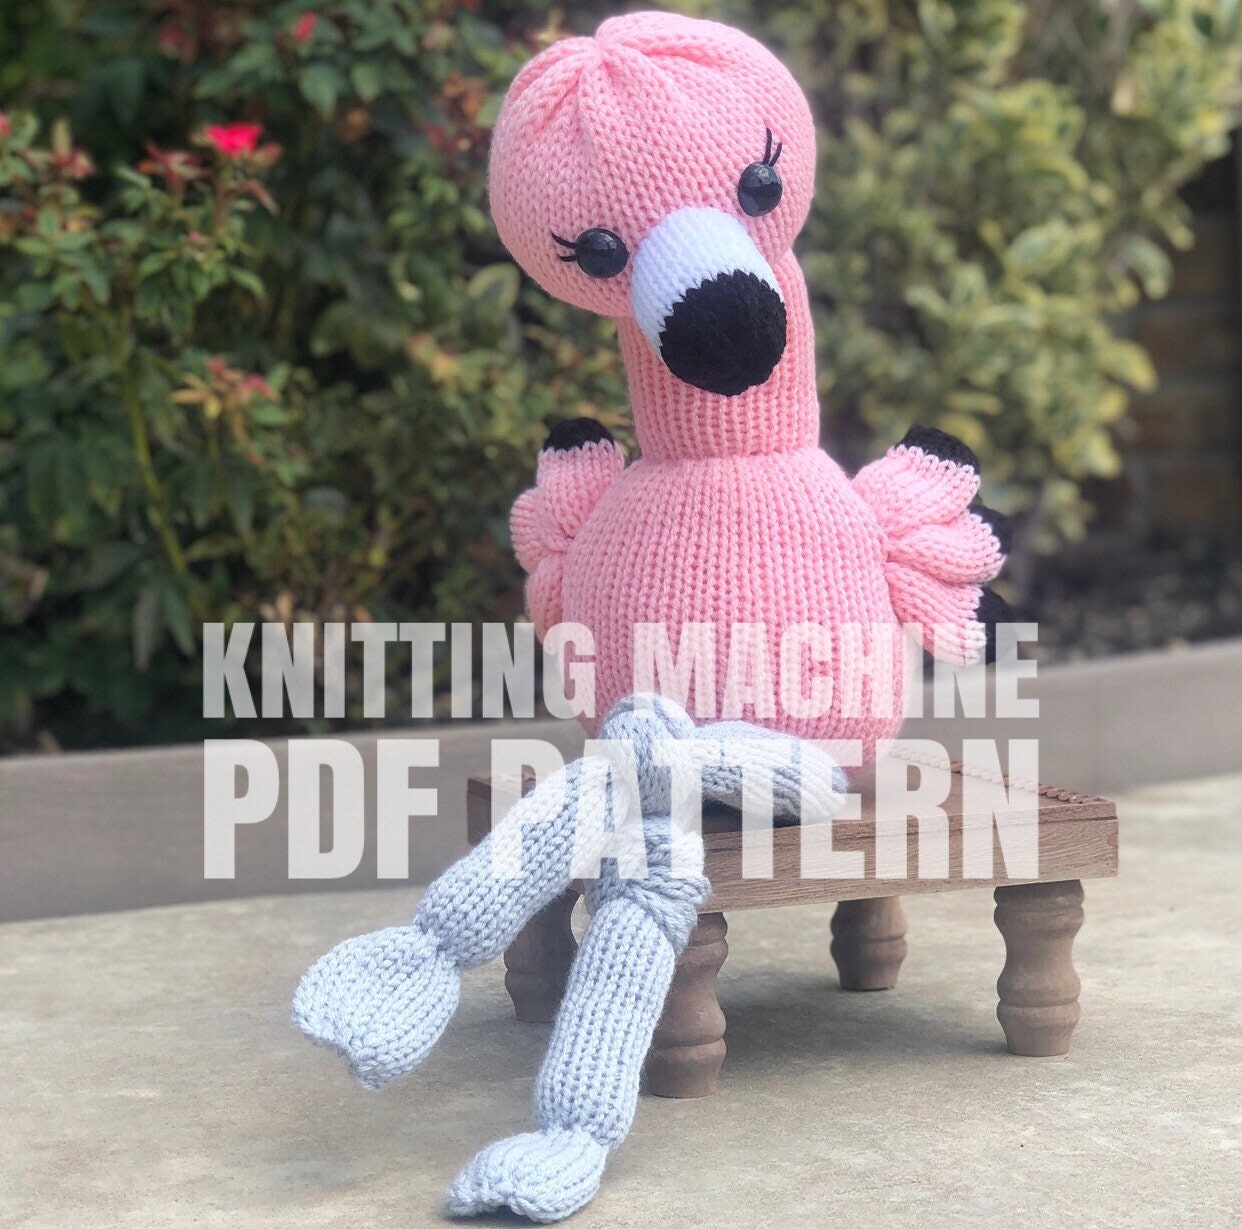 Knit and Crochet Teddy Bear Pattern, Knitting Machine Patterns, Addi  Express, Sentro 22, Loom Knitting PDF Tutorial 